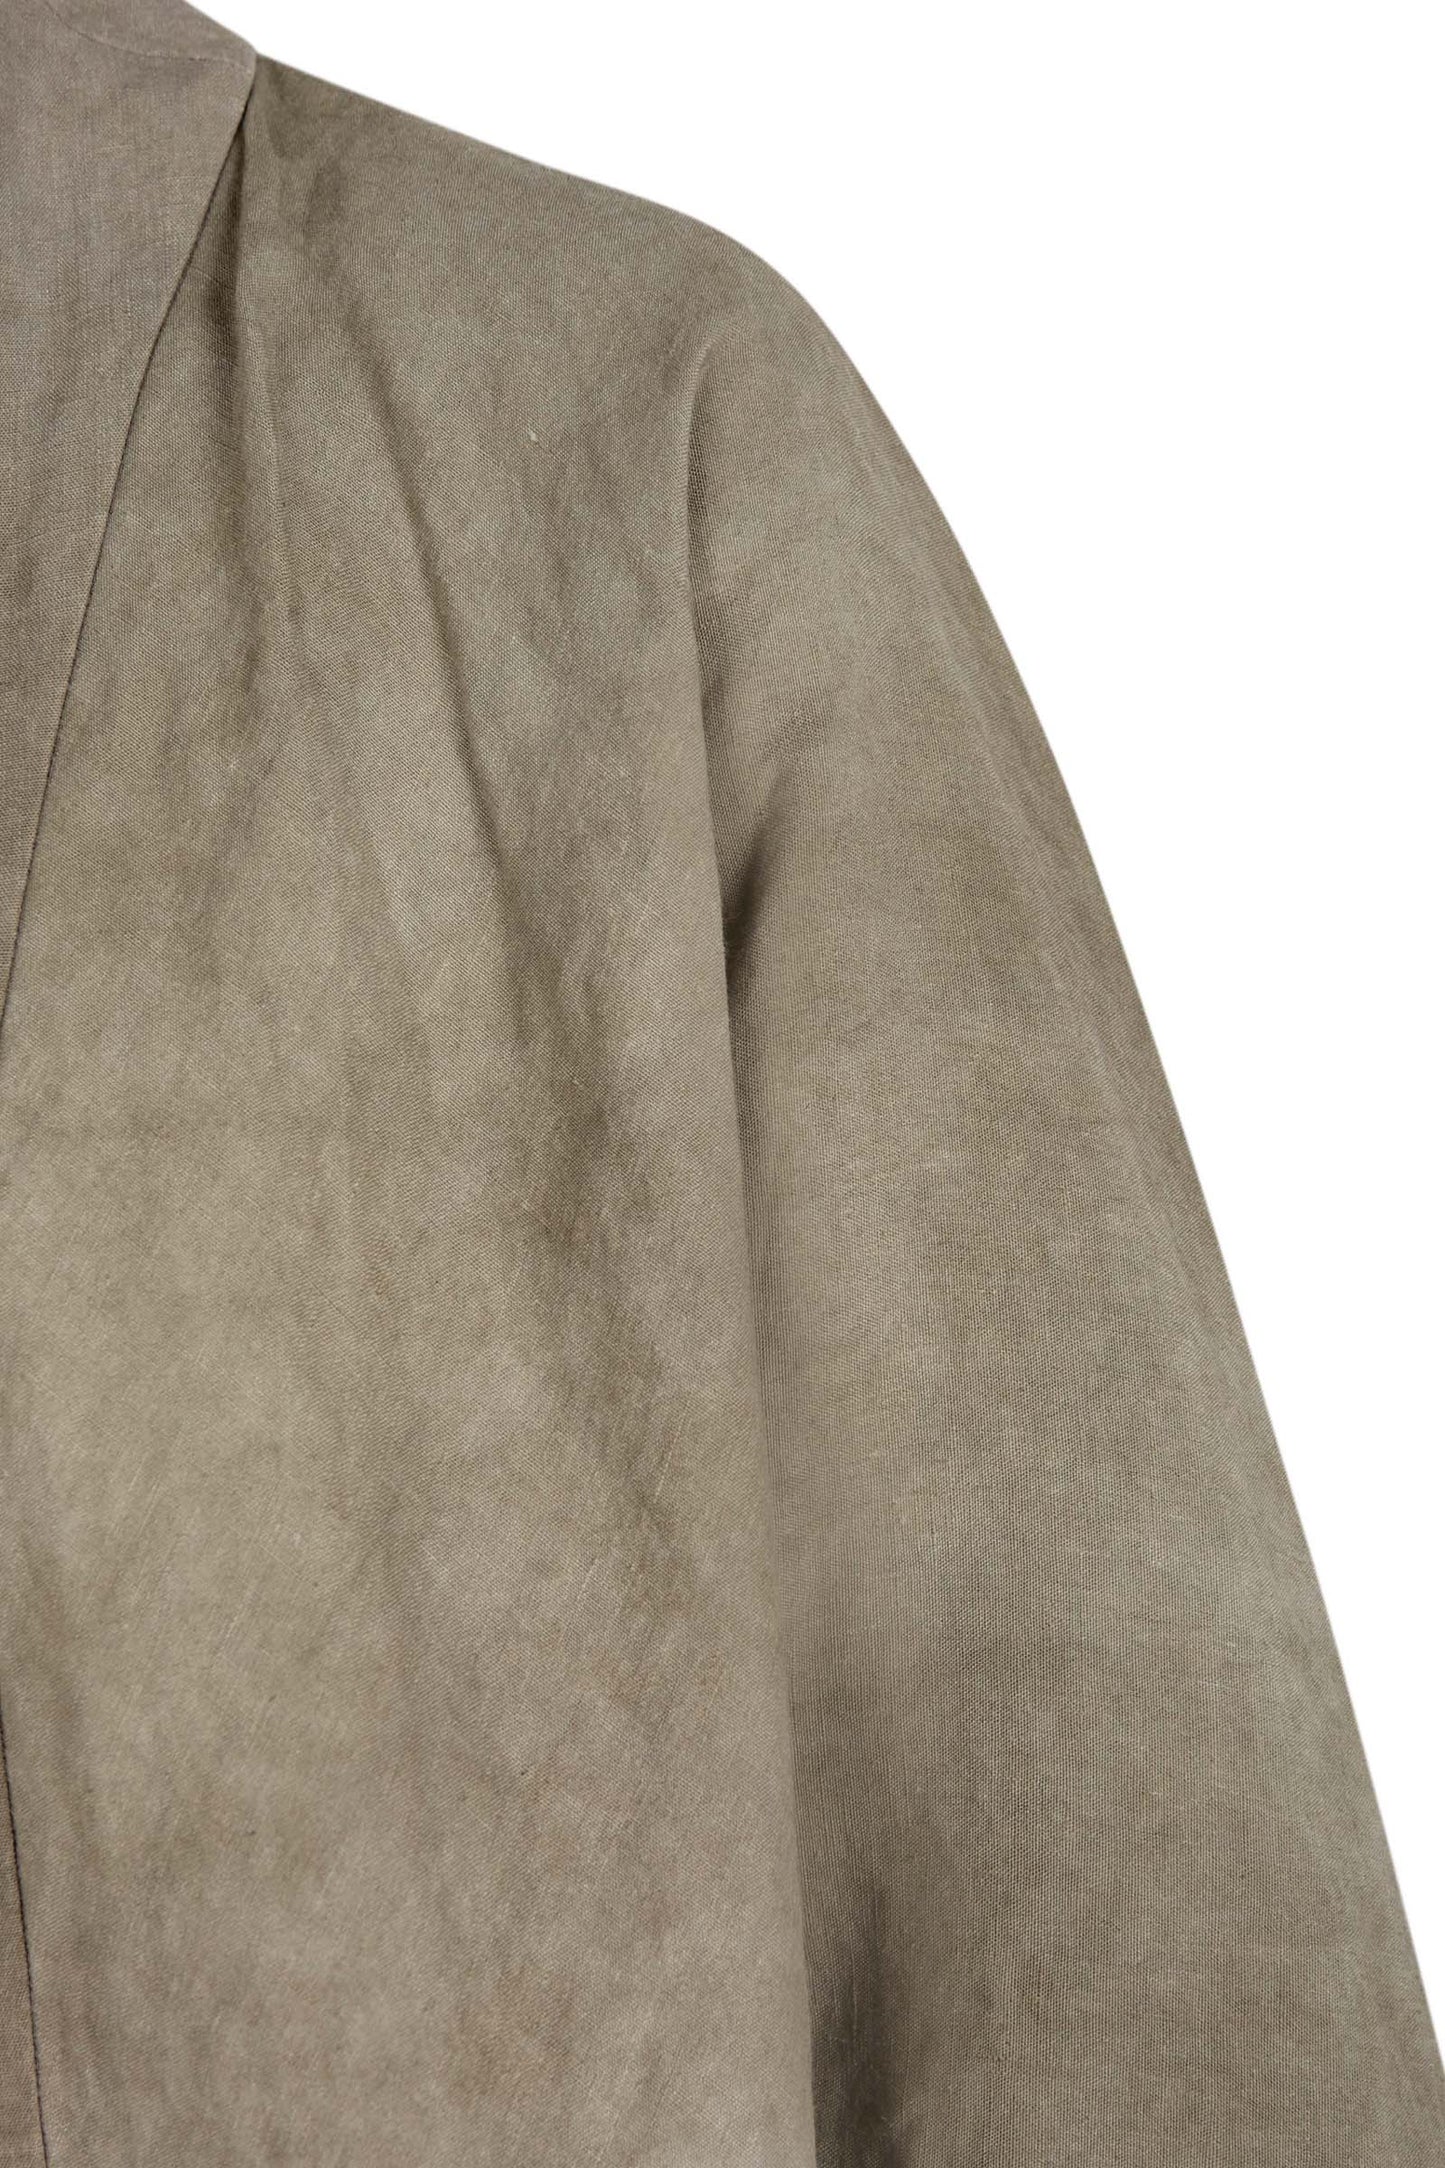 Bimba, abrigo en lino maltinto gris piedra